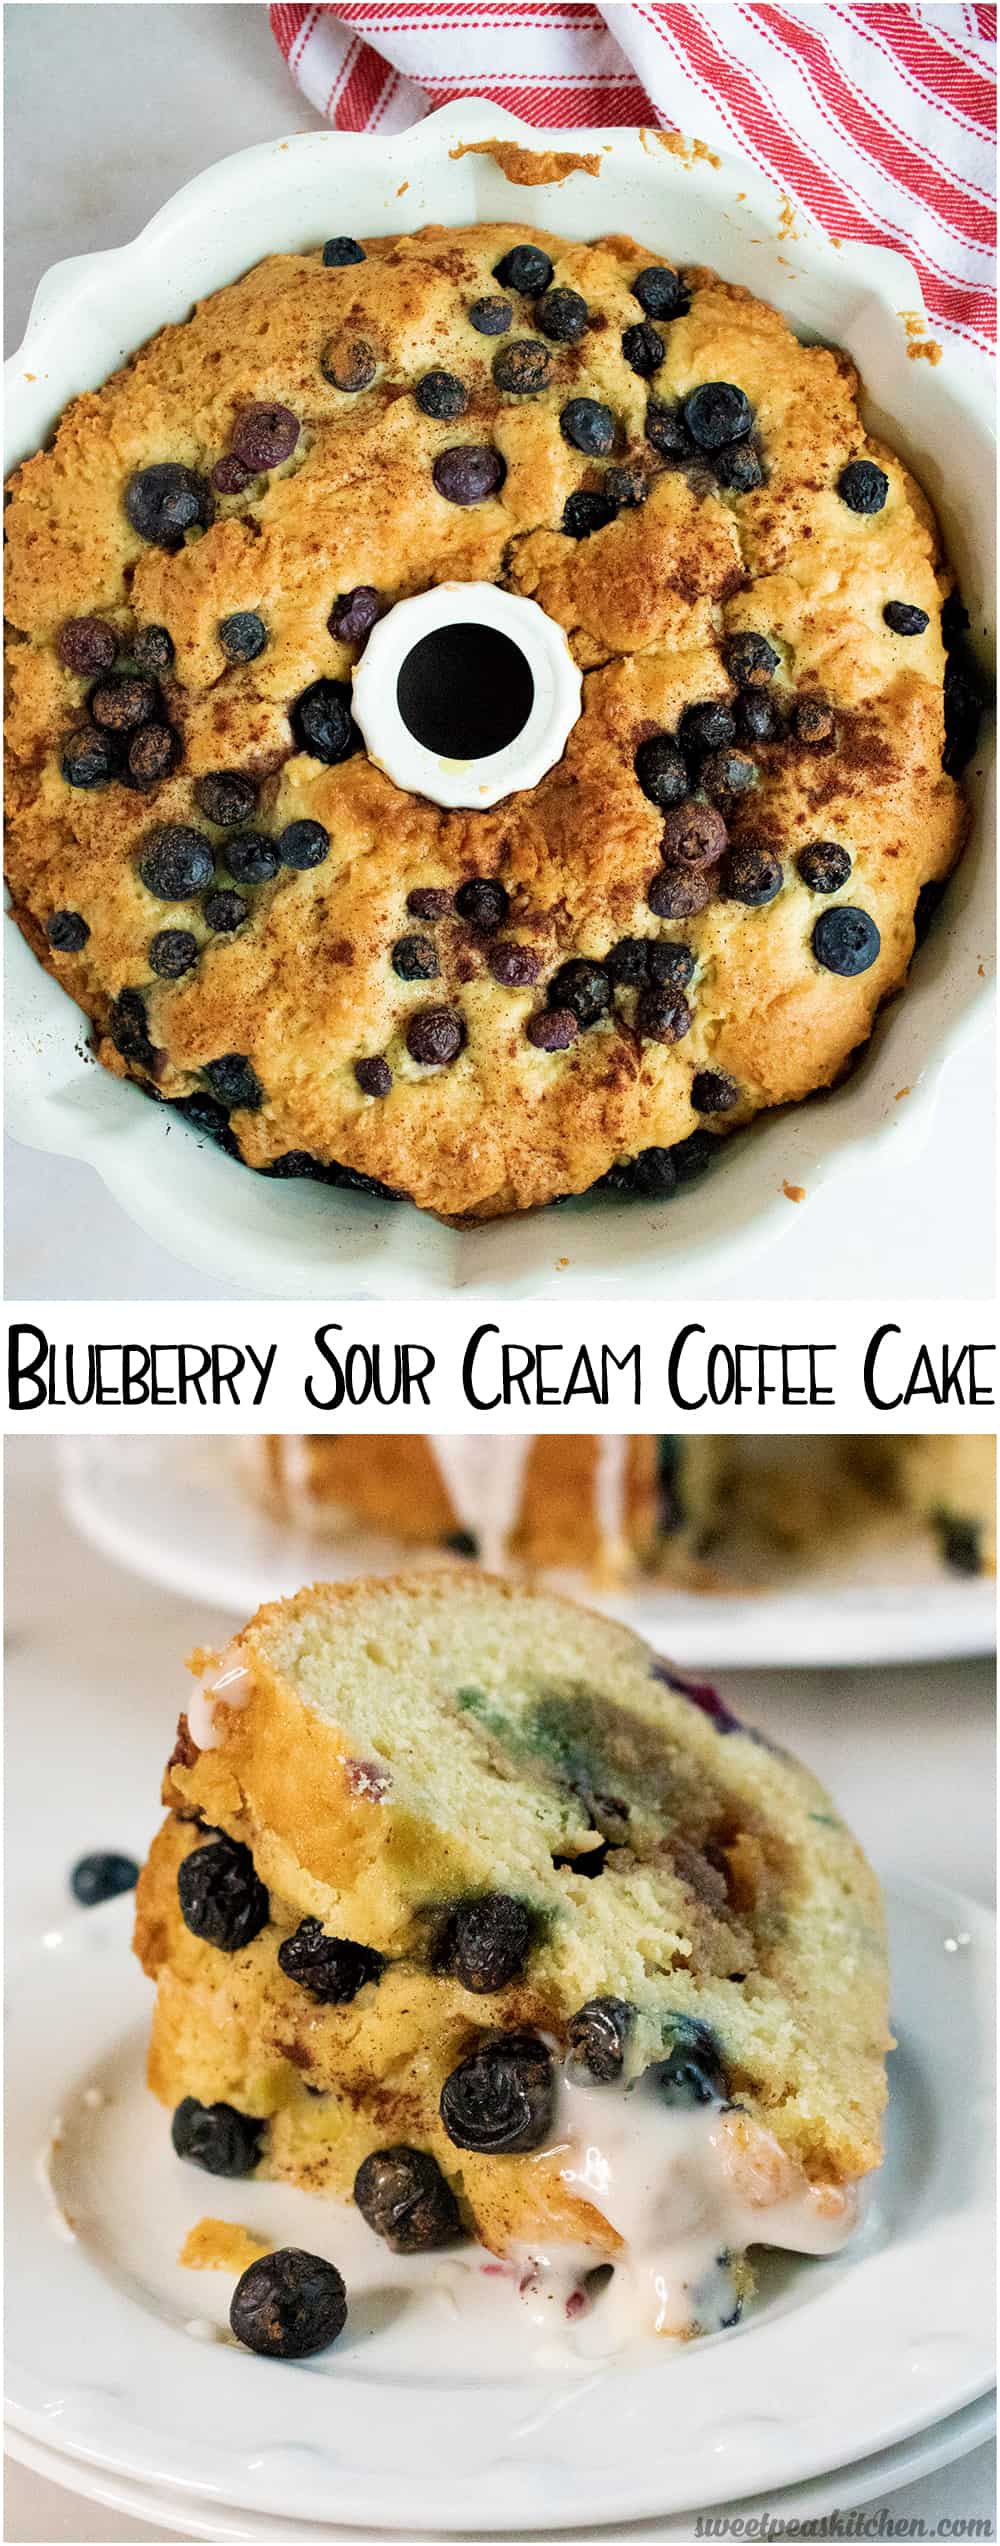 Blueberry Sour Cream Coffee Cake on pinterest